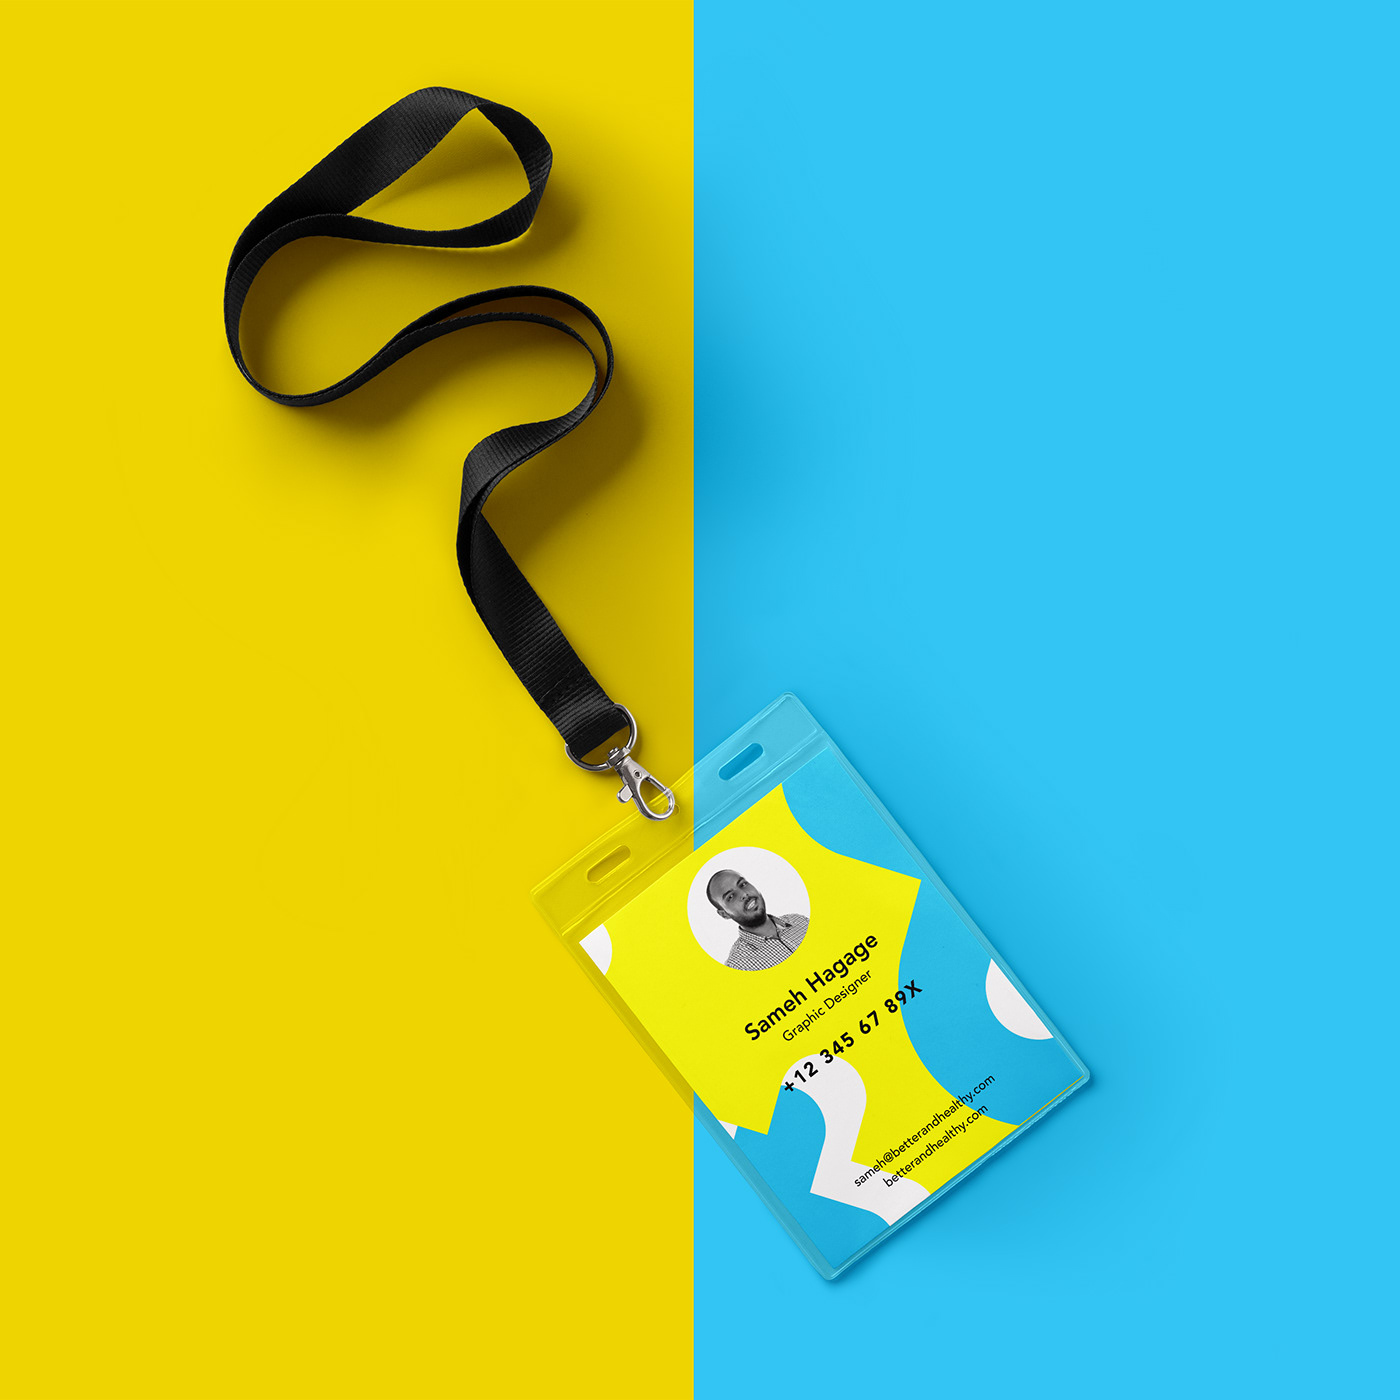 Health insurance blue yellow better healthy branding  identity corporate stationary